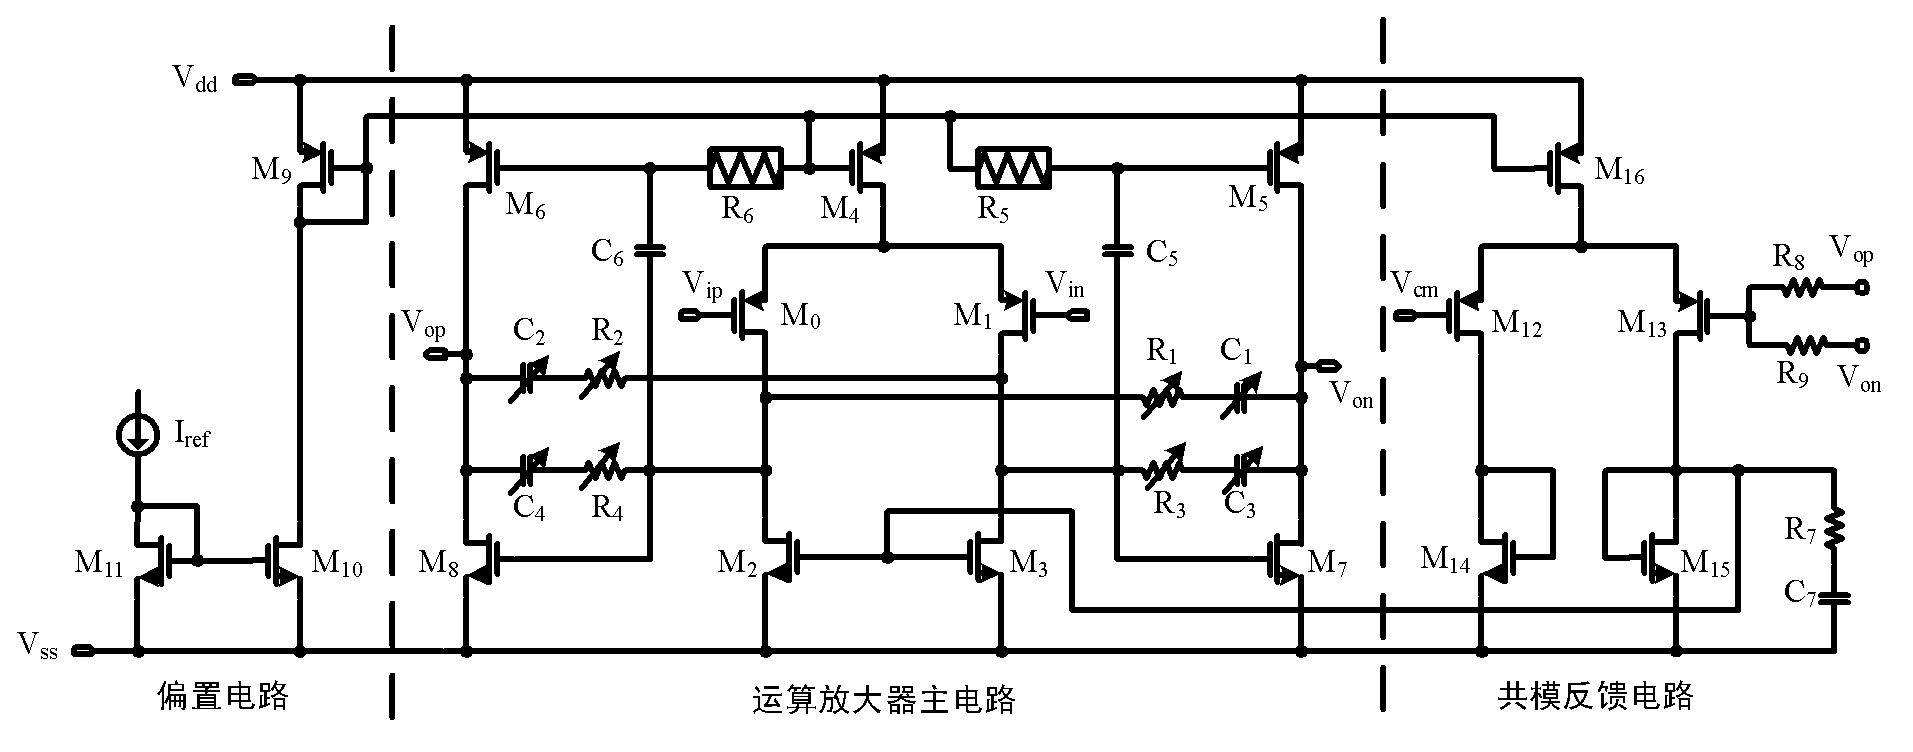 Bandwidth-adjustable operational amplifier circuit